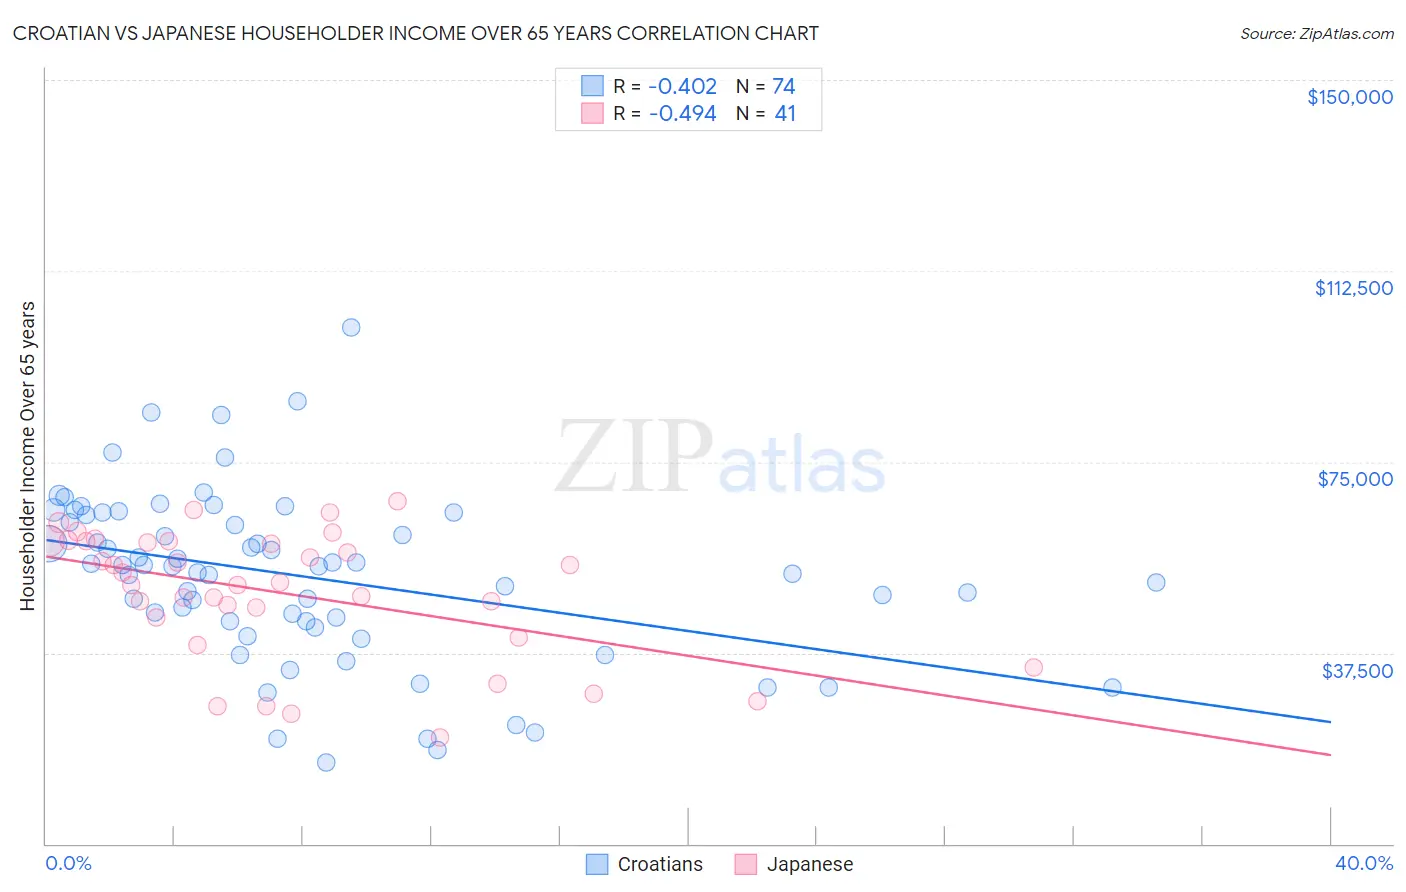 Croatian vs Japanese Householder Income Over 65 years